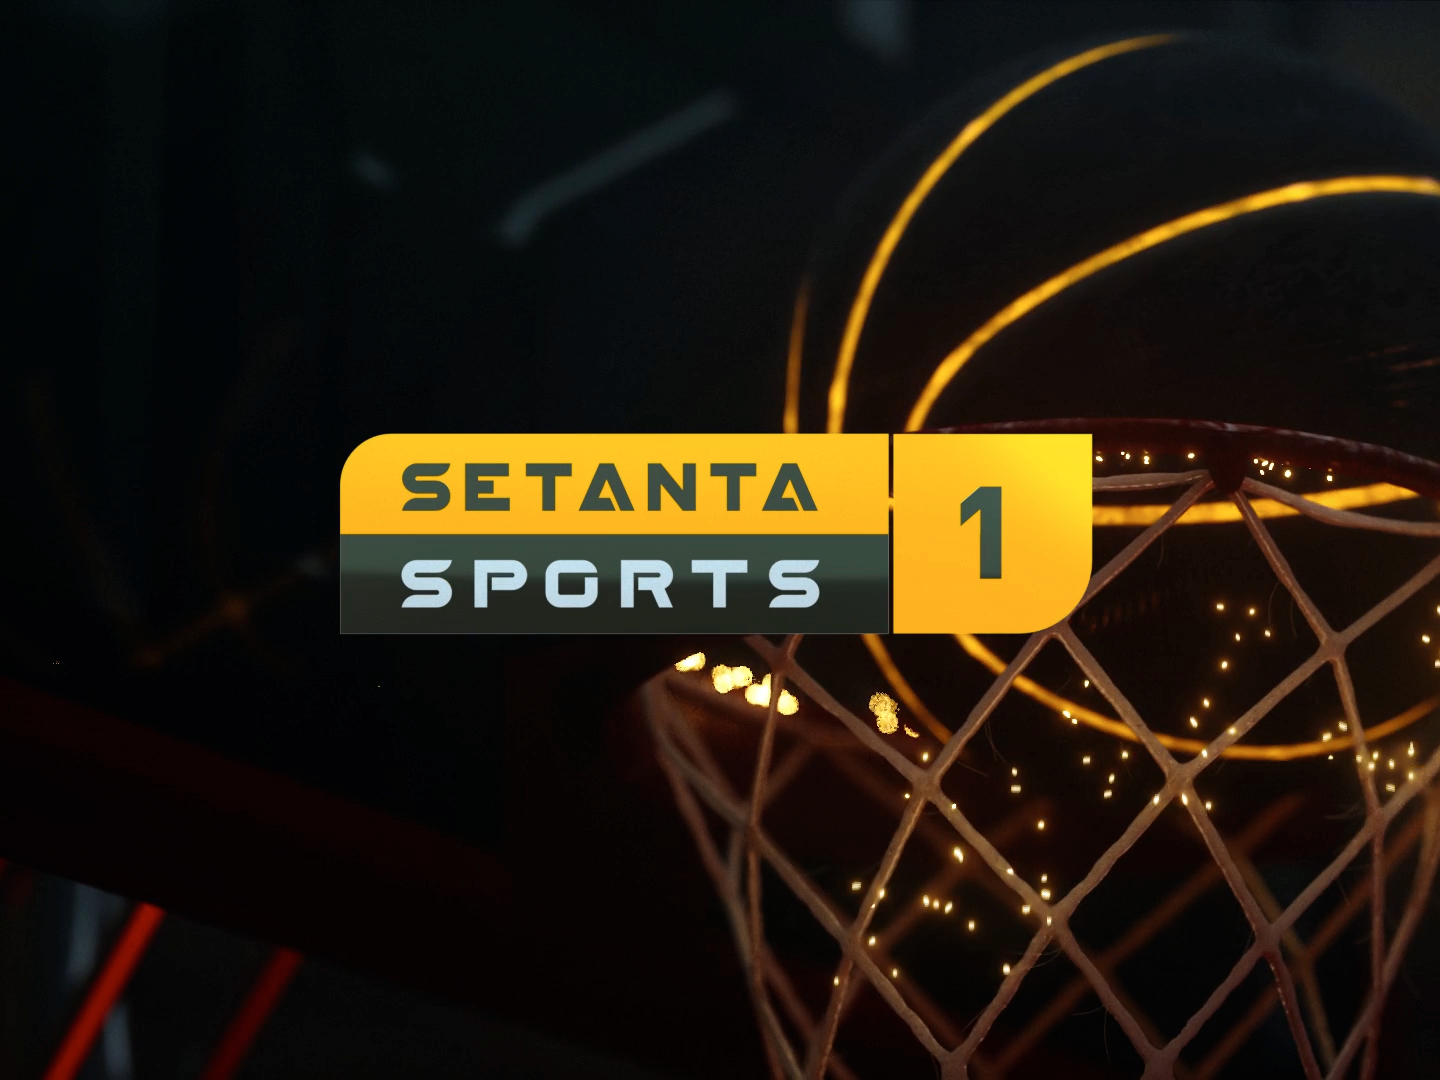 Setanta sport eurasia. Сетанта спорт. Сетанта спорт лого. Setanta Sports + логотип телеканала. Setanta Sport 1 логотип Телеканал.